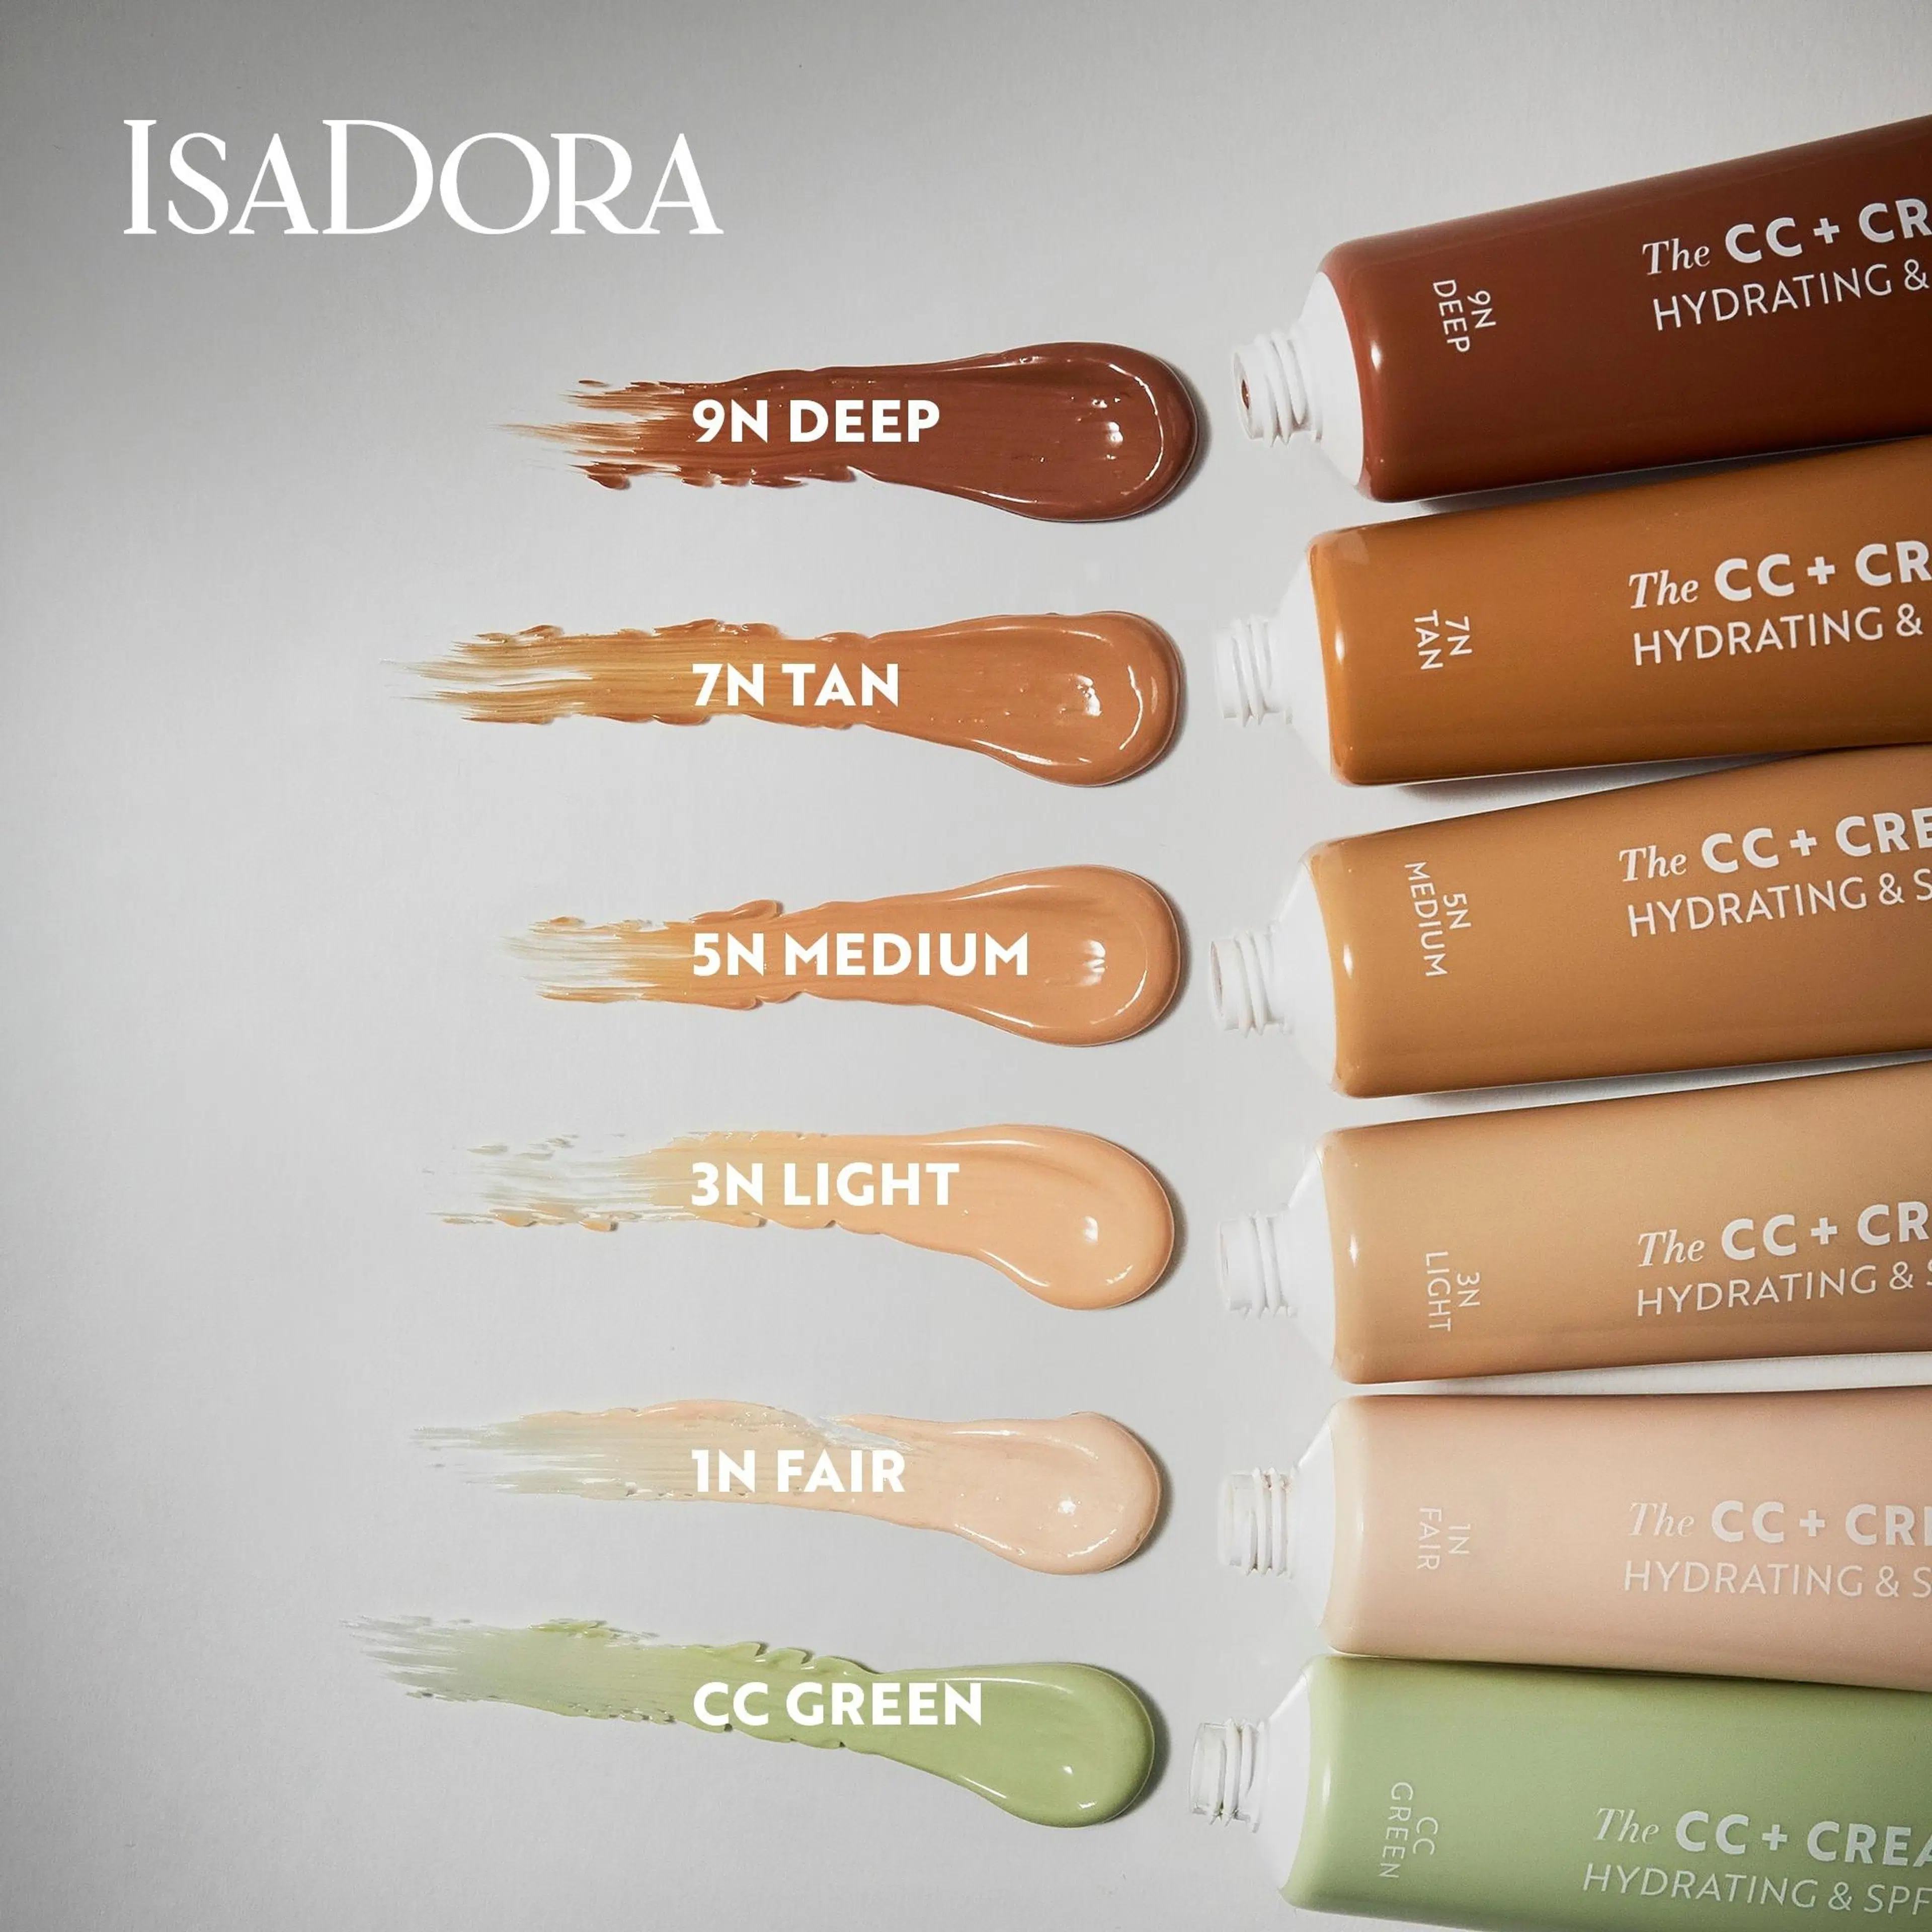 IsaDora The CC + Cream 30 ml